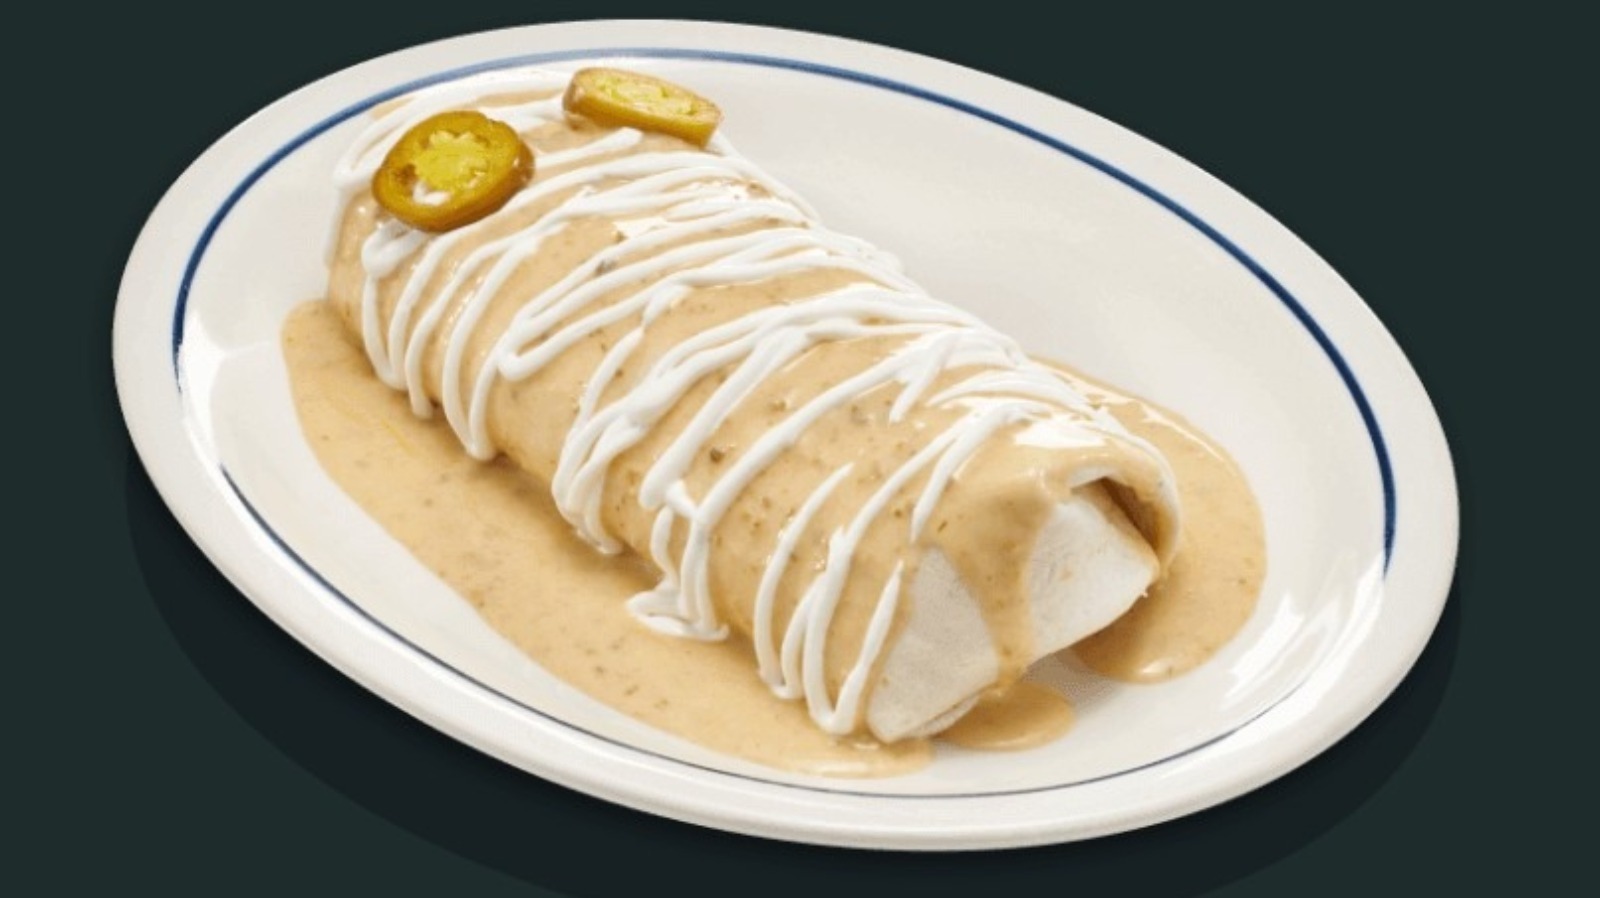 IHOP's New Mummy Burrito Is Perfect For The Halloween Season